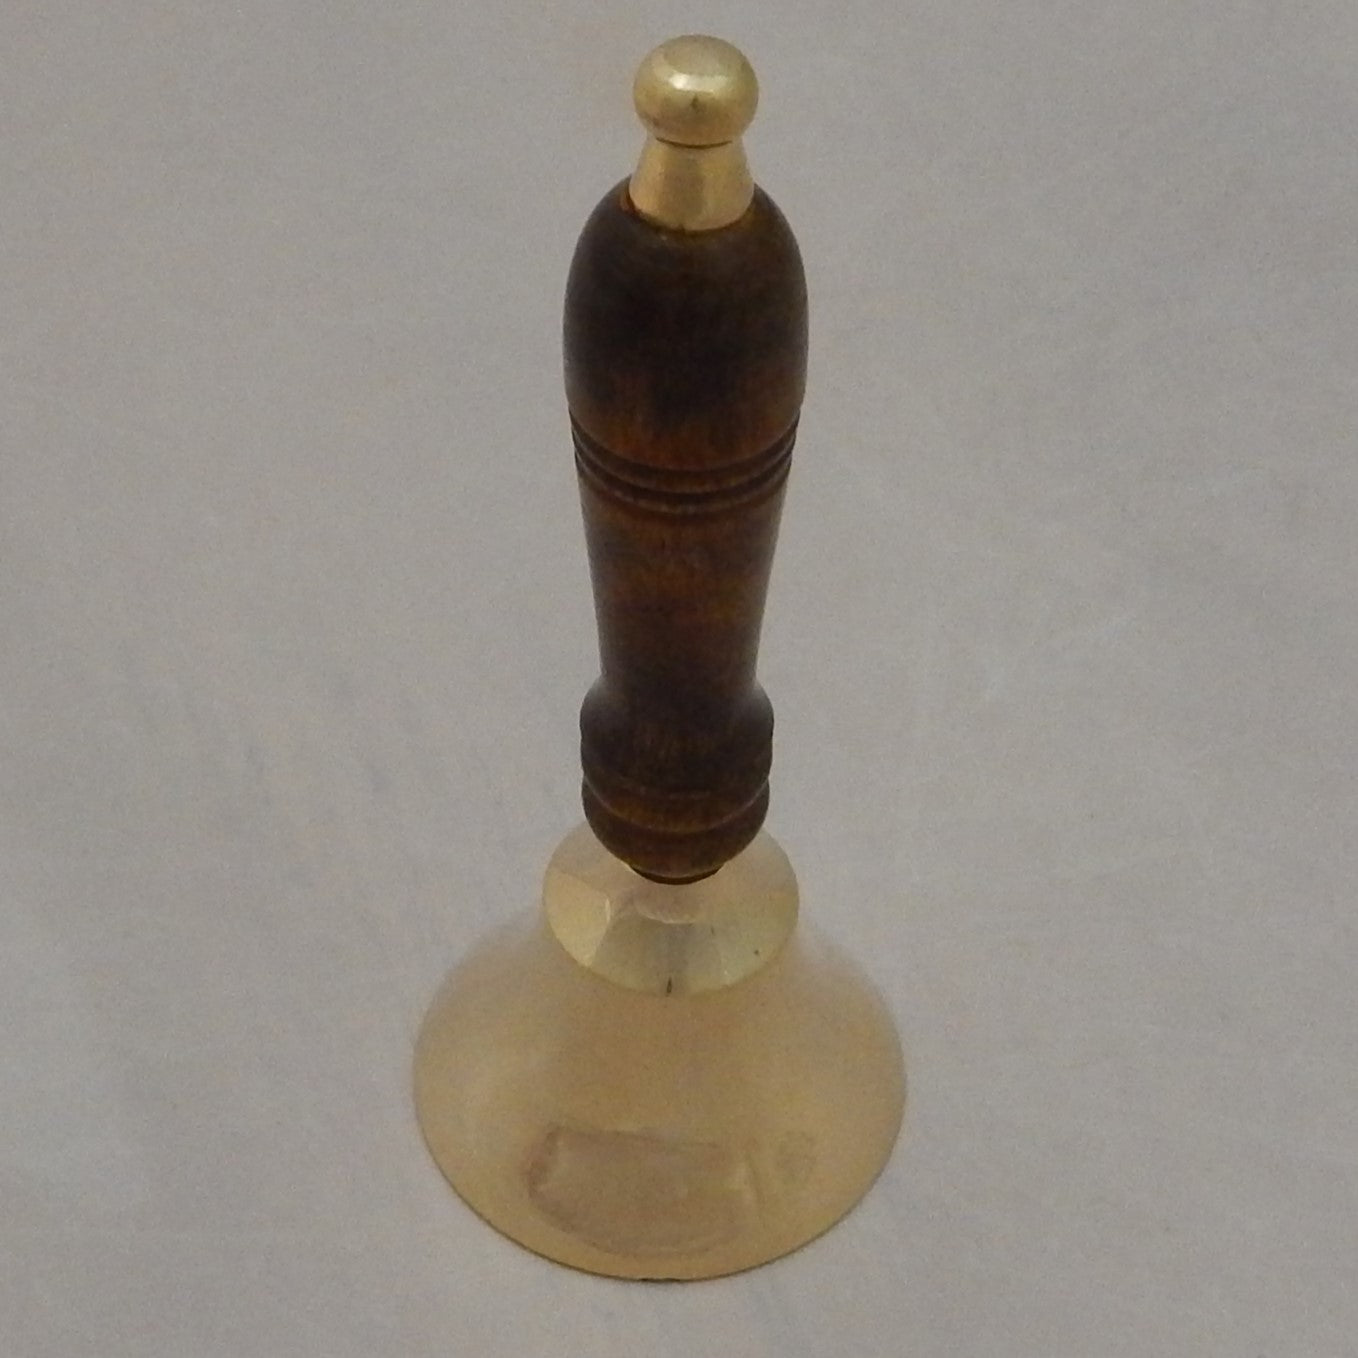 6-Inch Wooden Handle Brass Bell